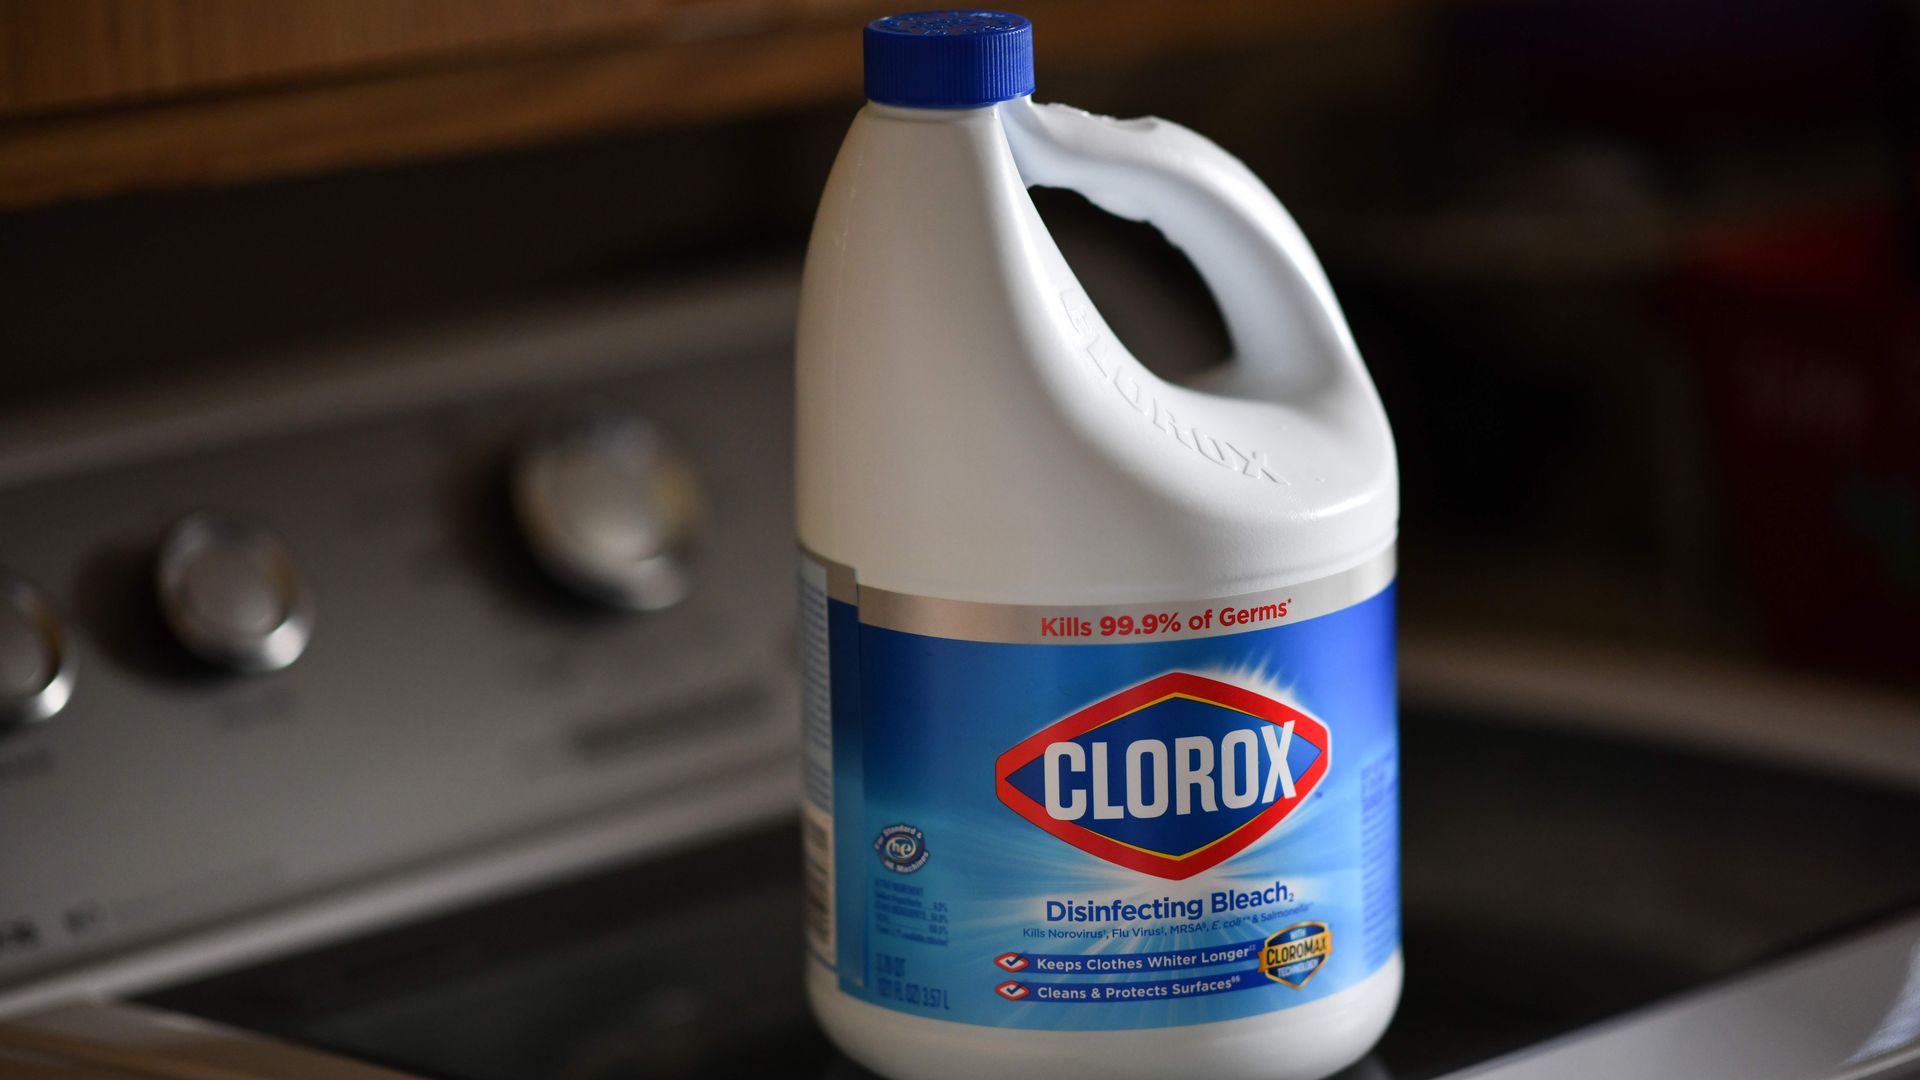 Image of Clorox bleach